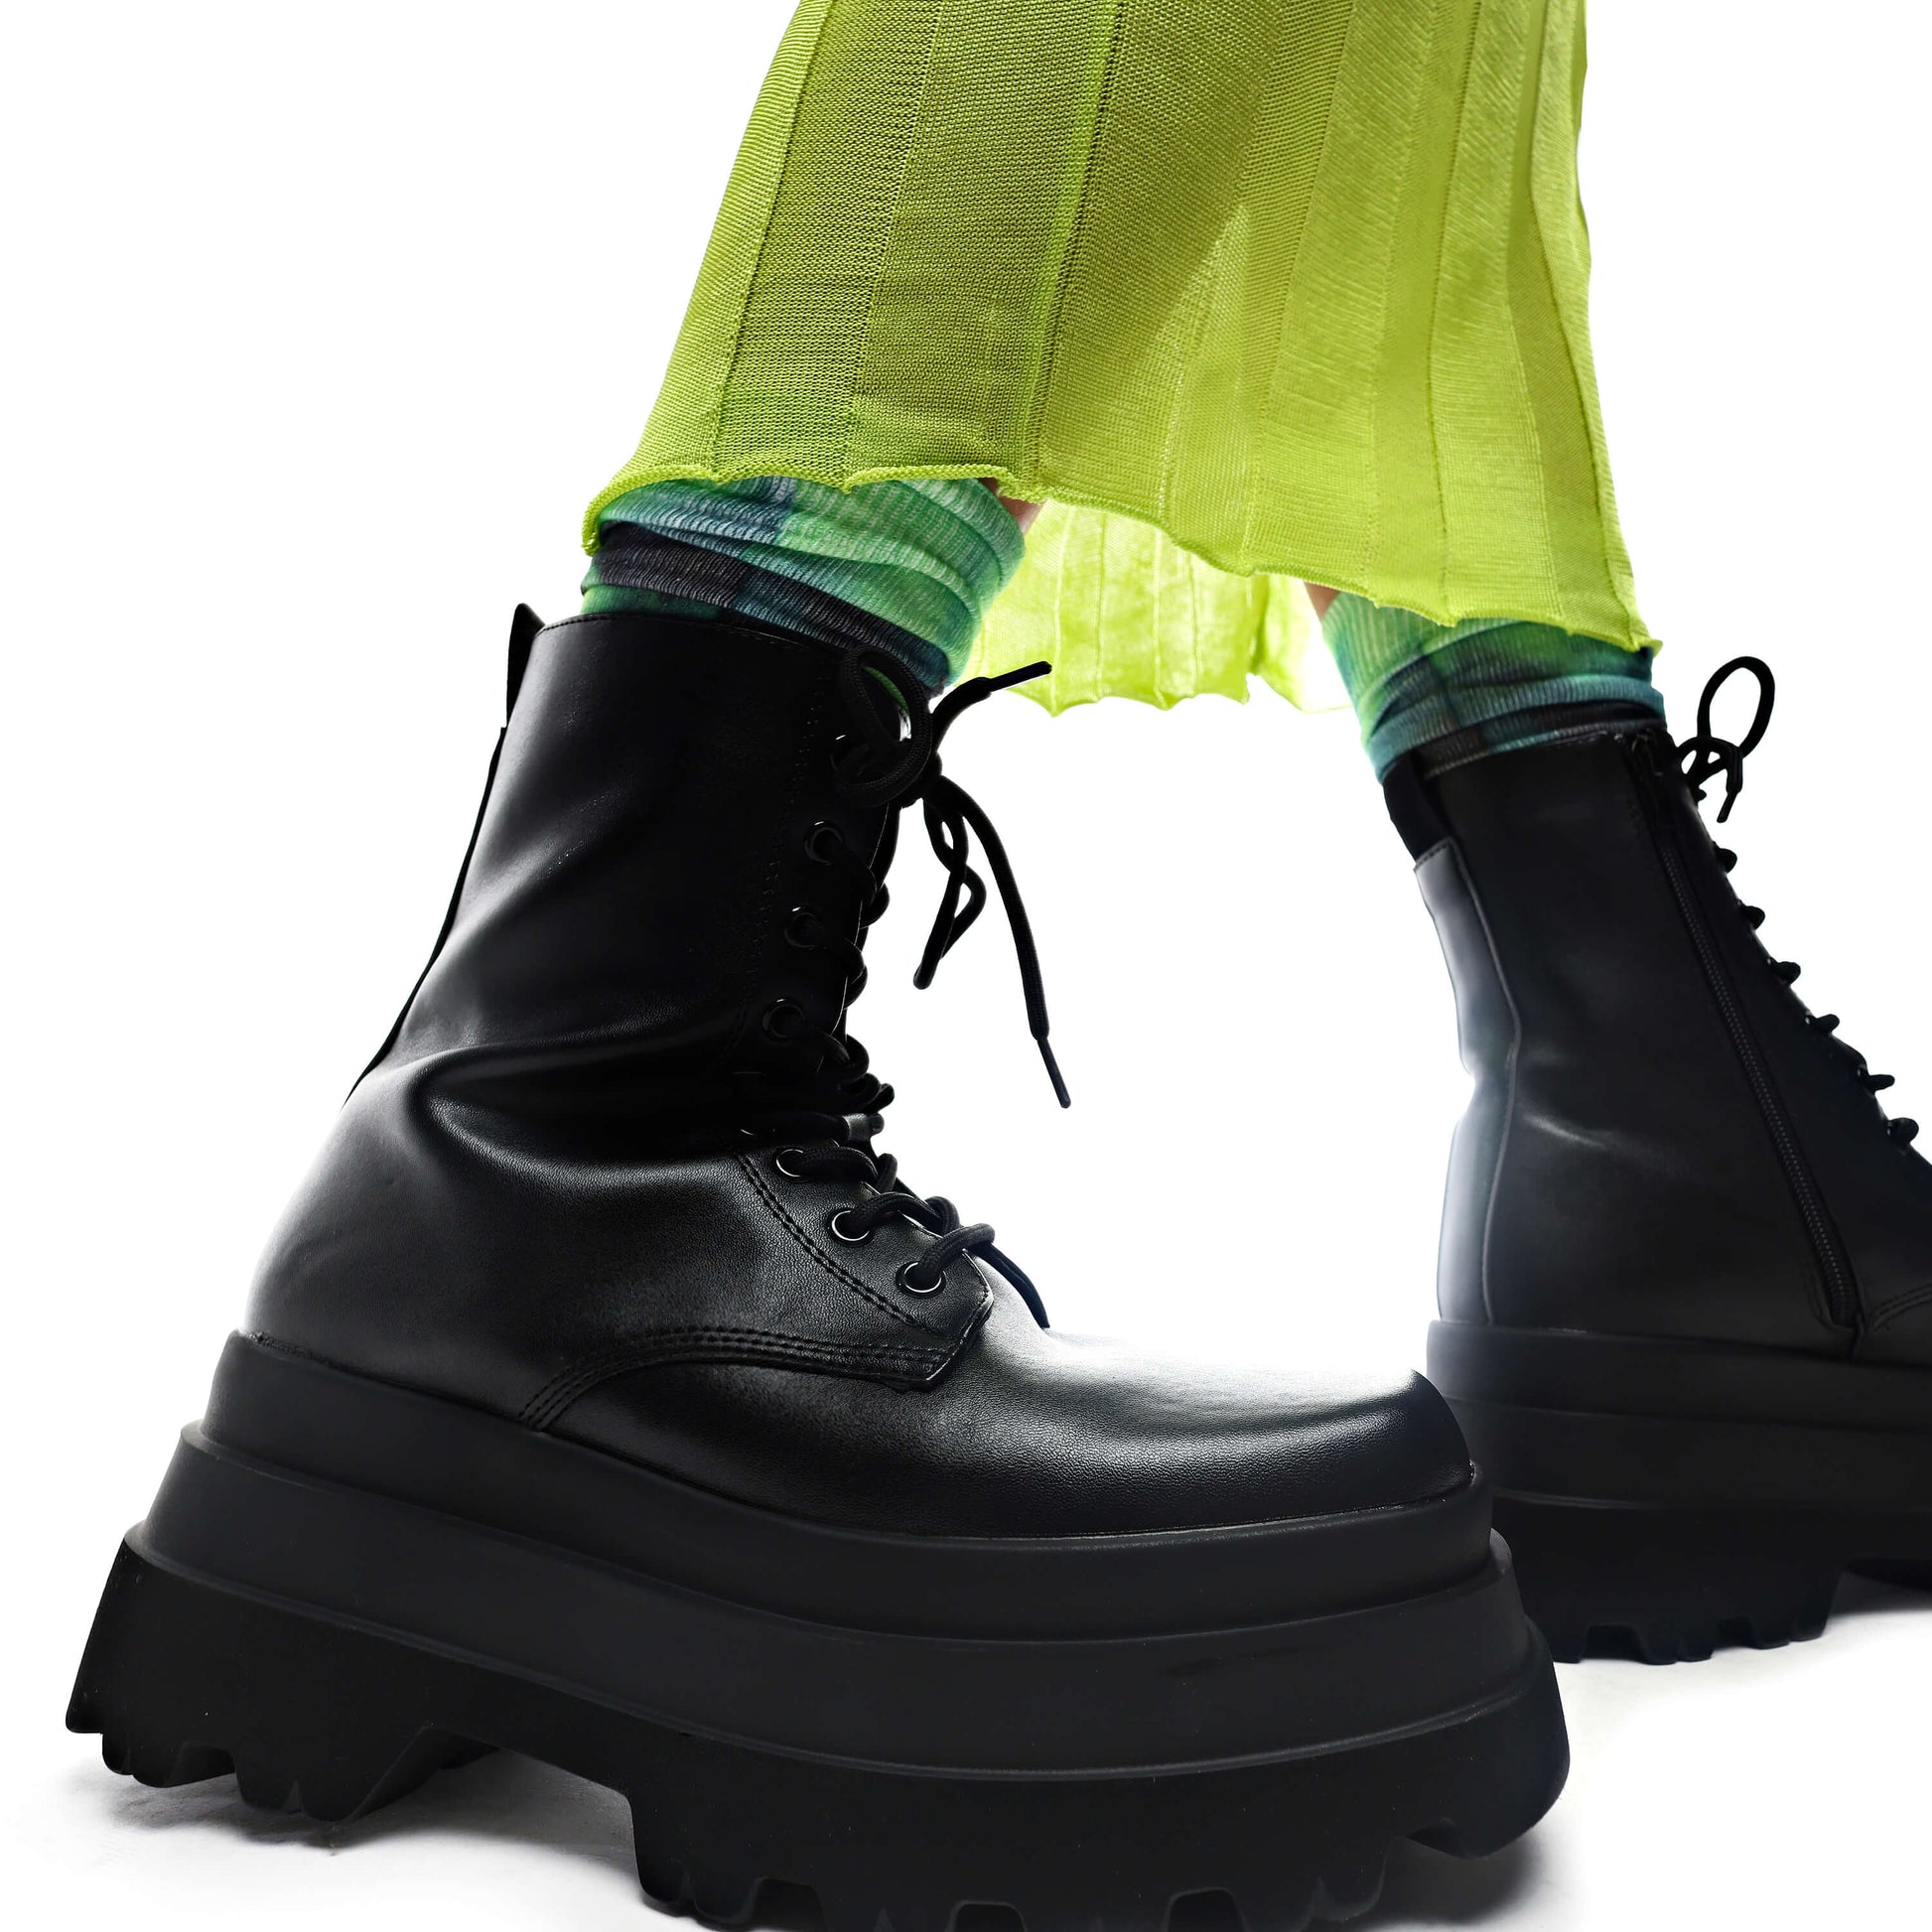 Deathwatch Trident Platform Boots - Ankle Boots - KOI Footwear - Black - 